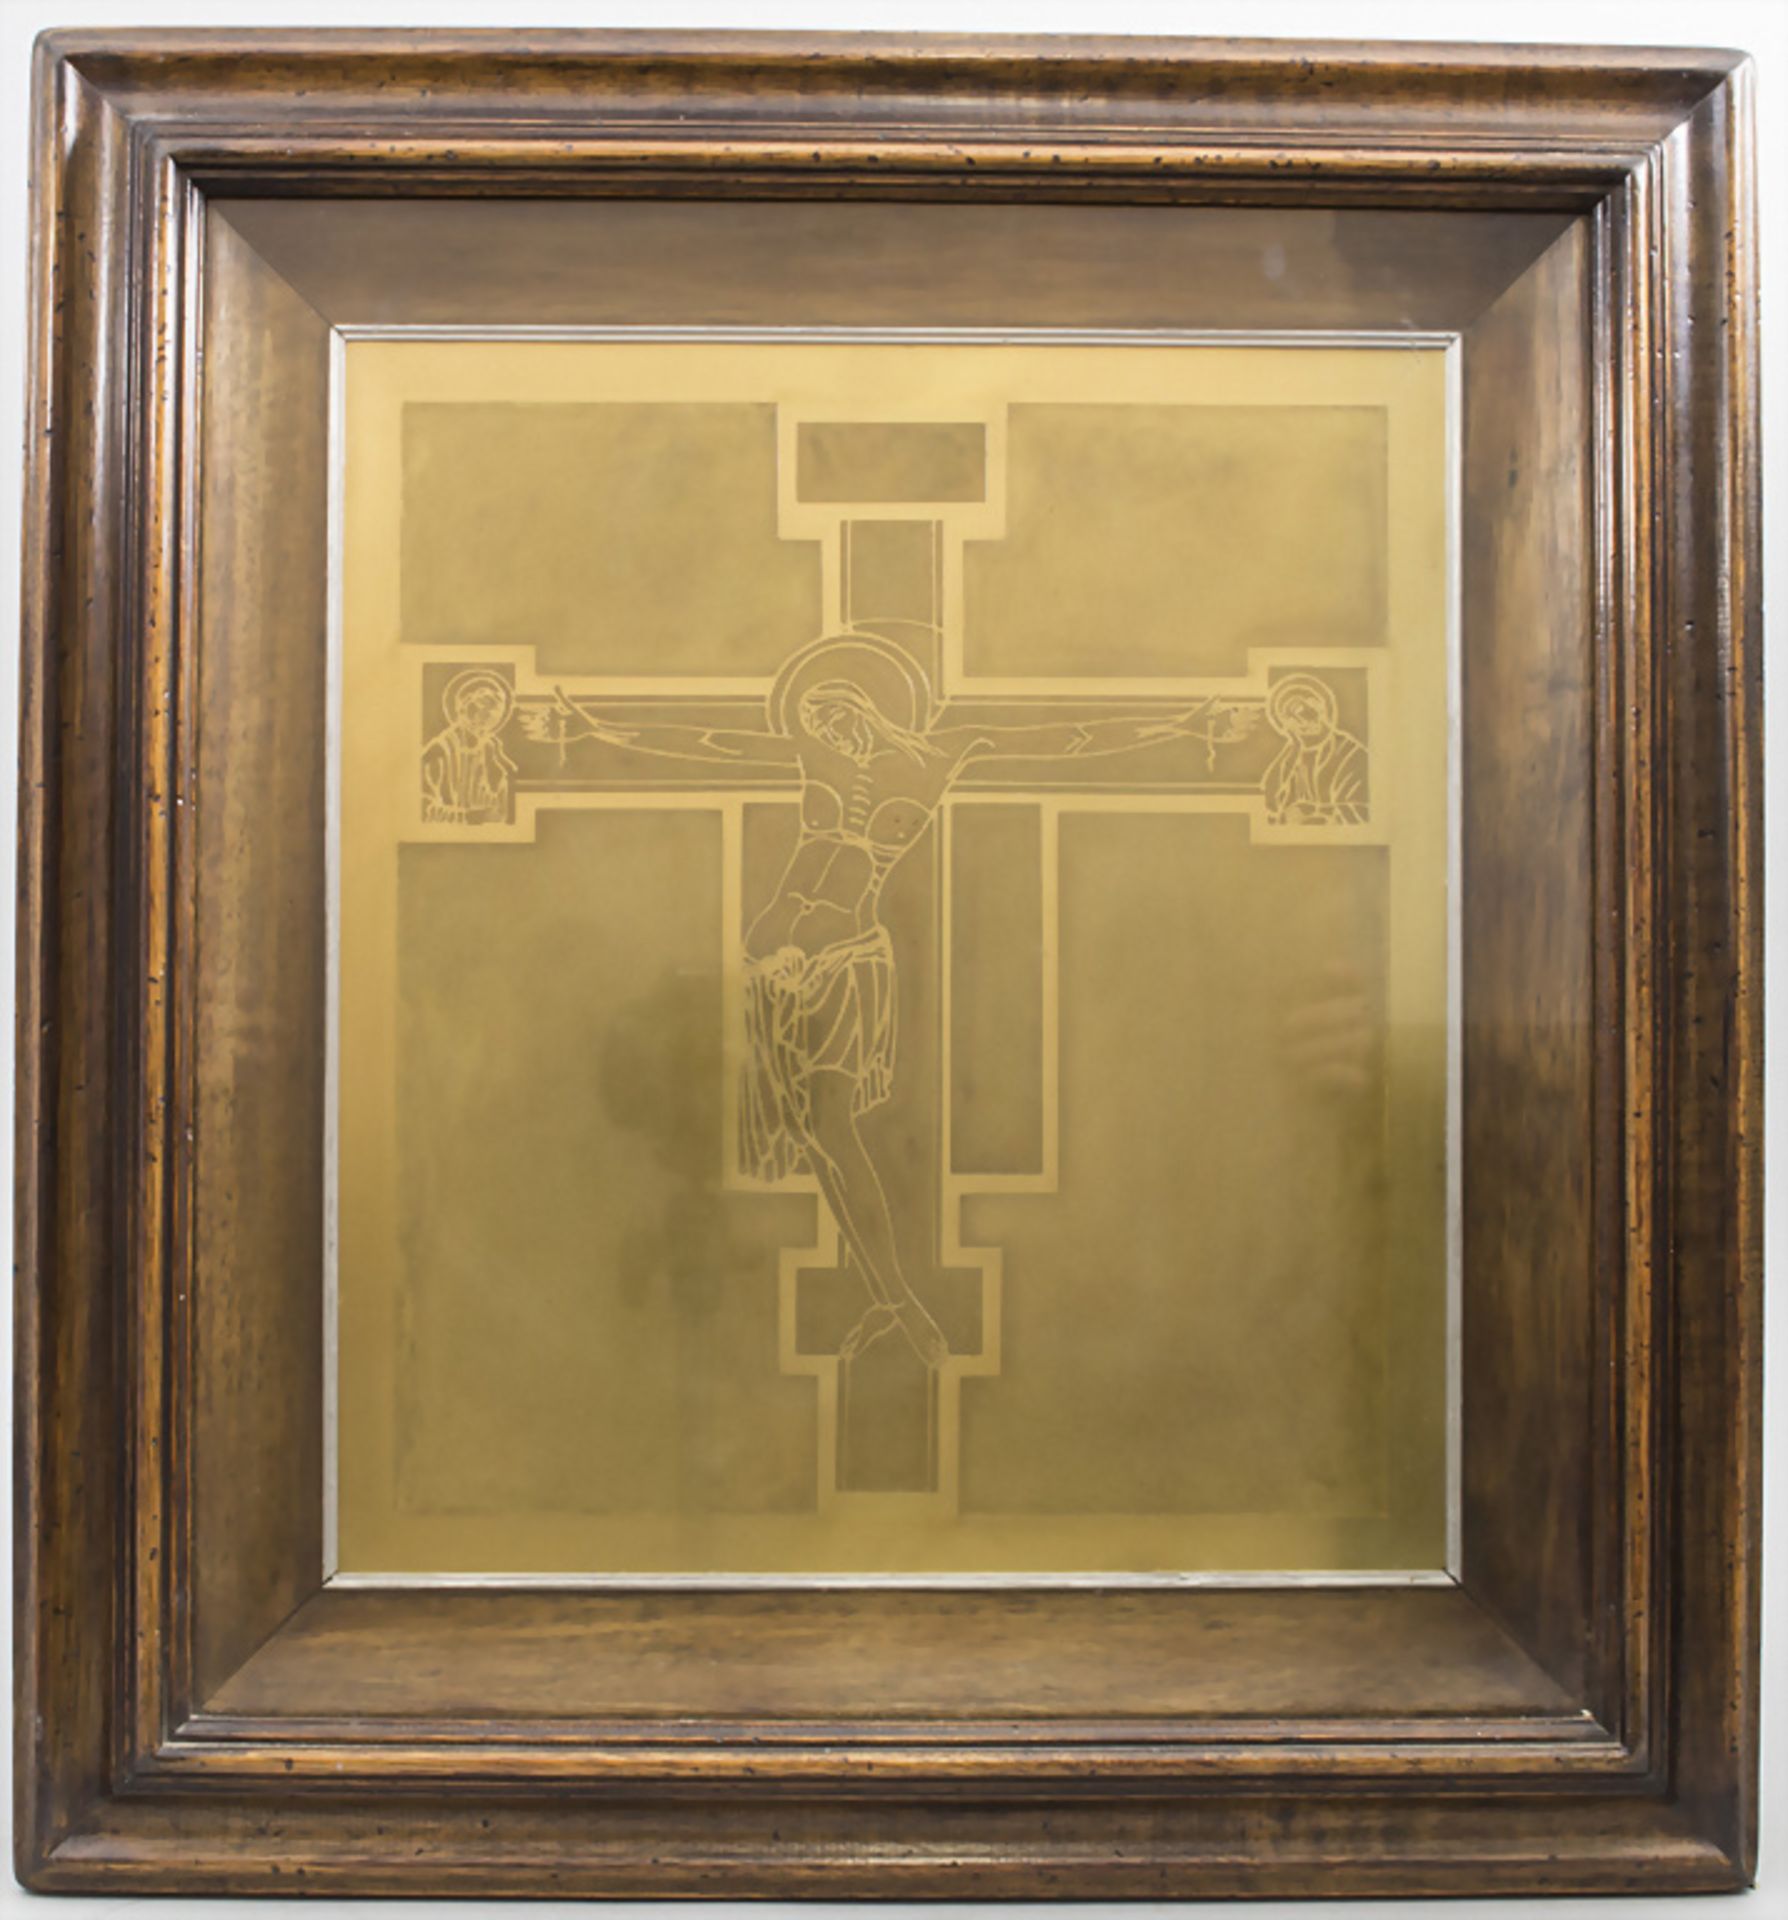 Art Déco Kruzifixbild / An Art Déco crucifix brass picture, um 1920 - Image 2 of 3